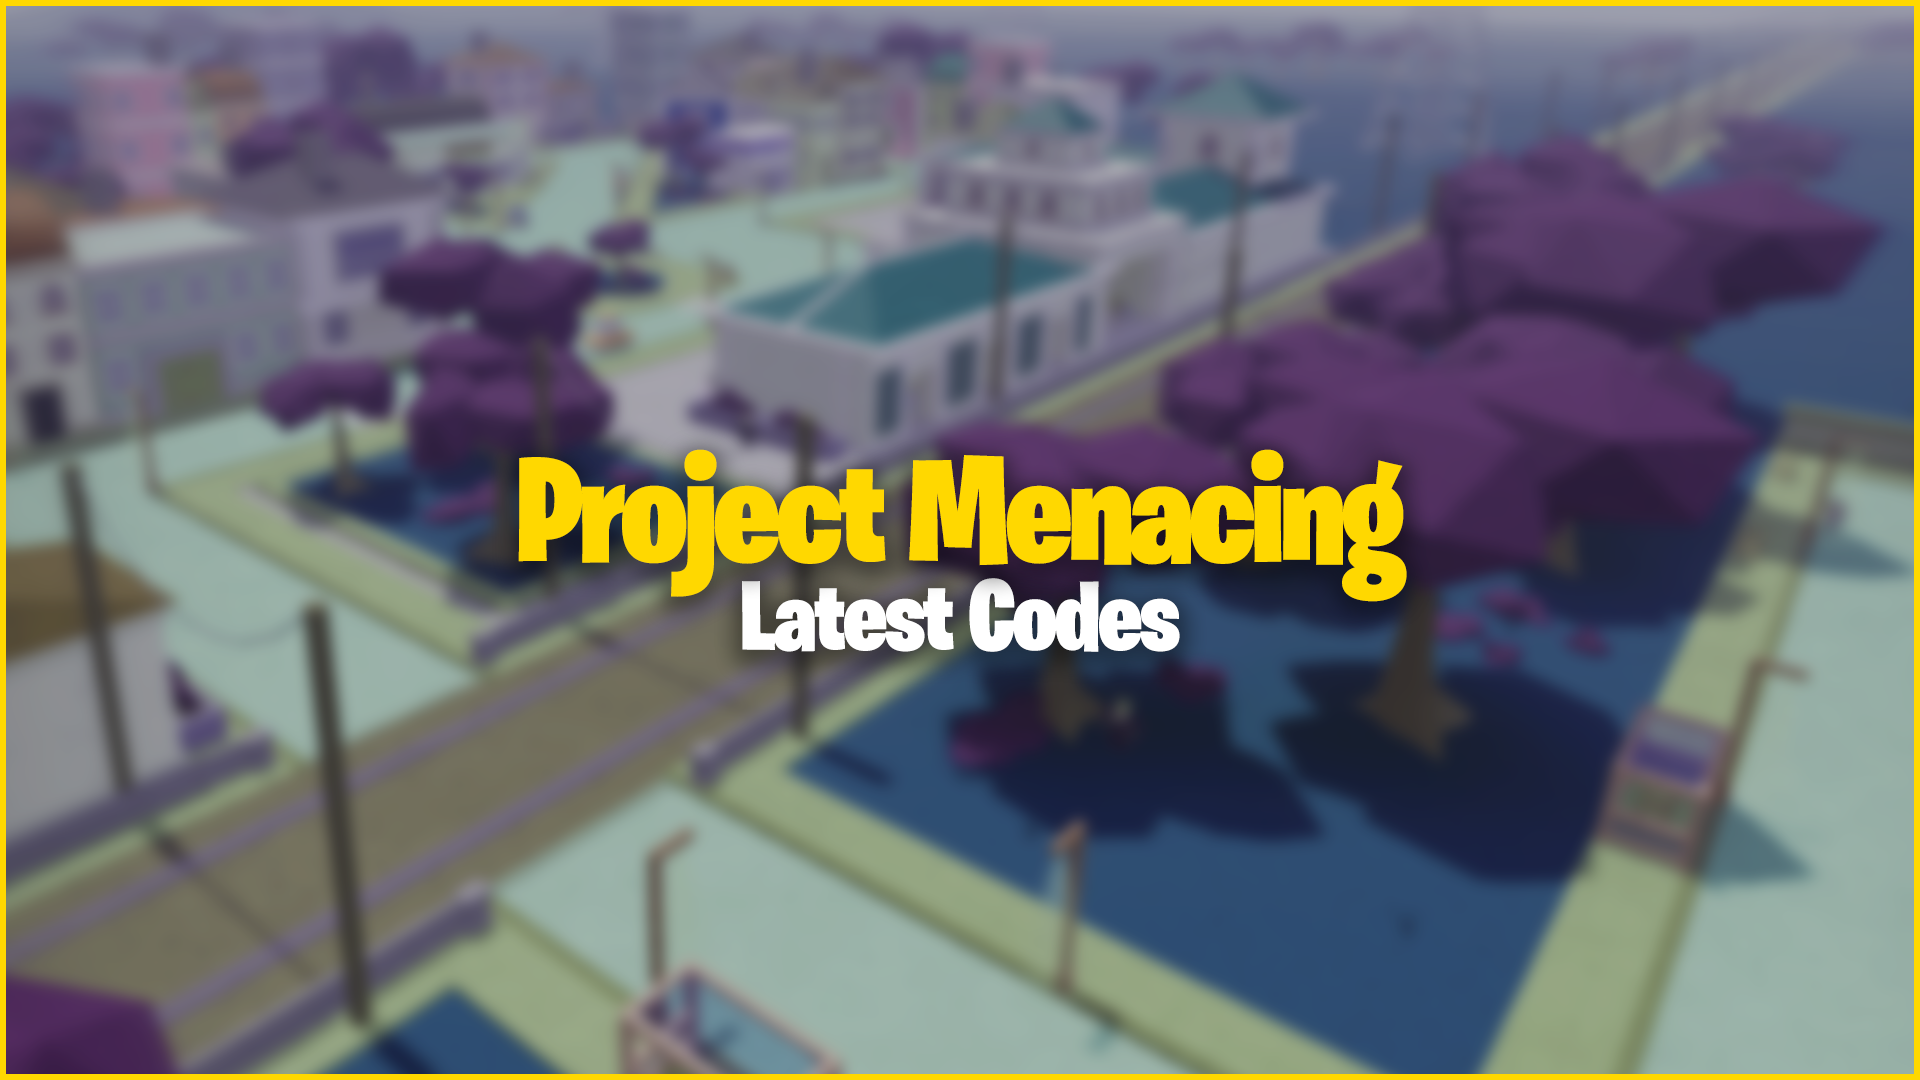 Project Menacing Codes